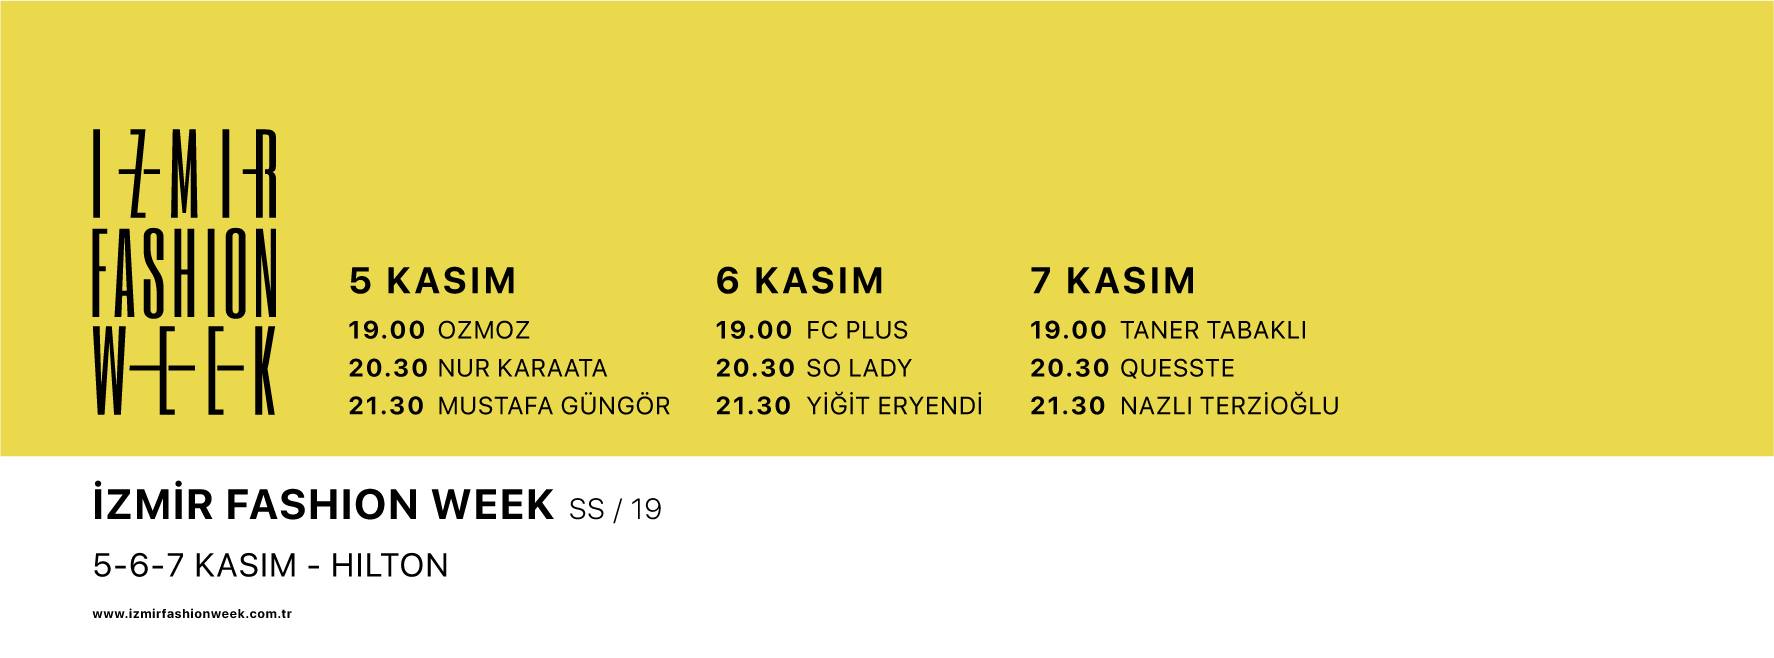 İzmir Fashion Week SS/19 6th Season